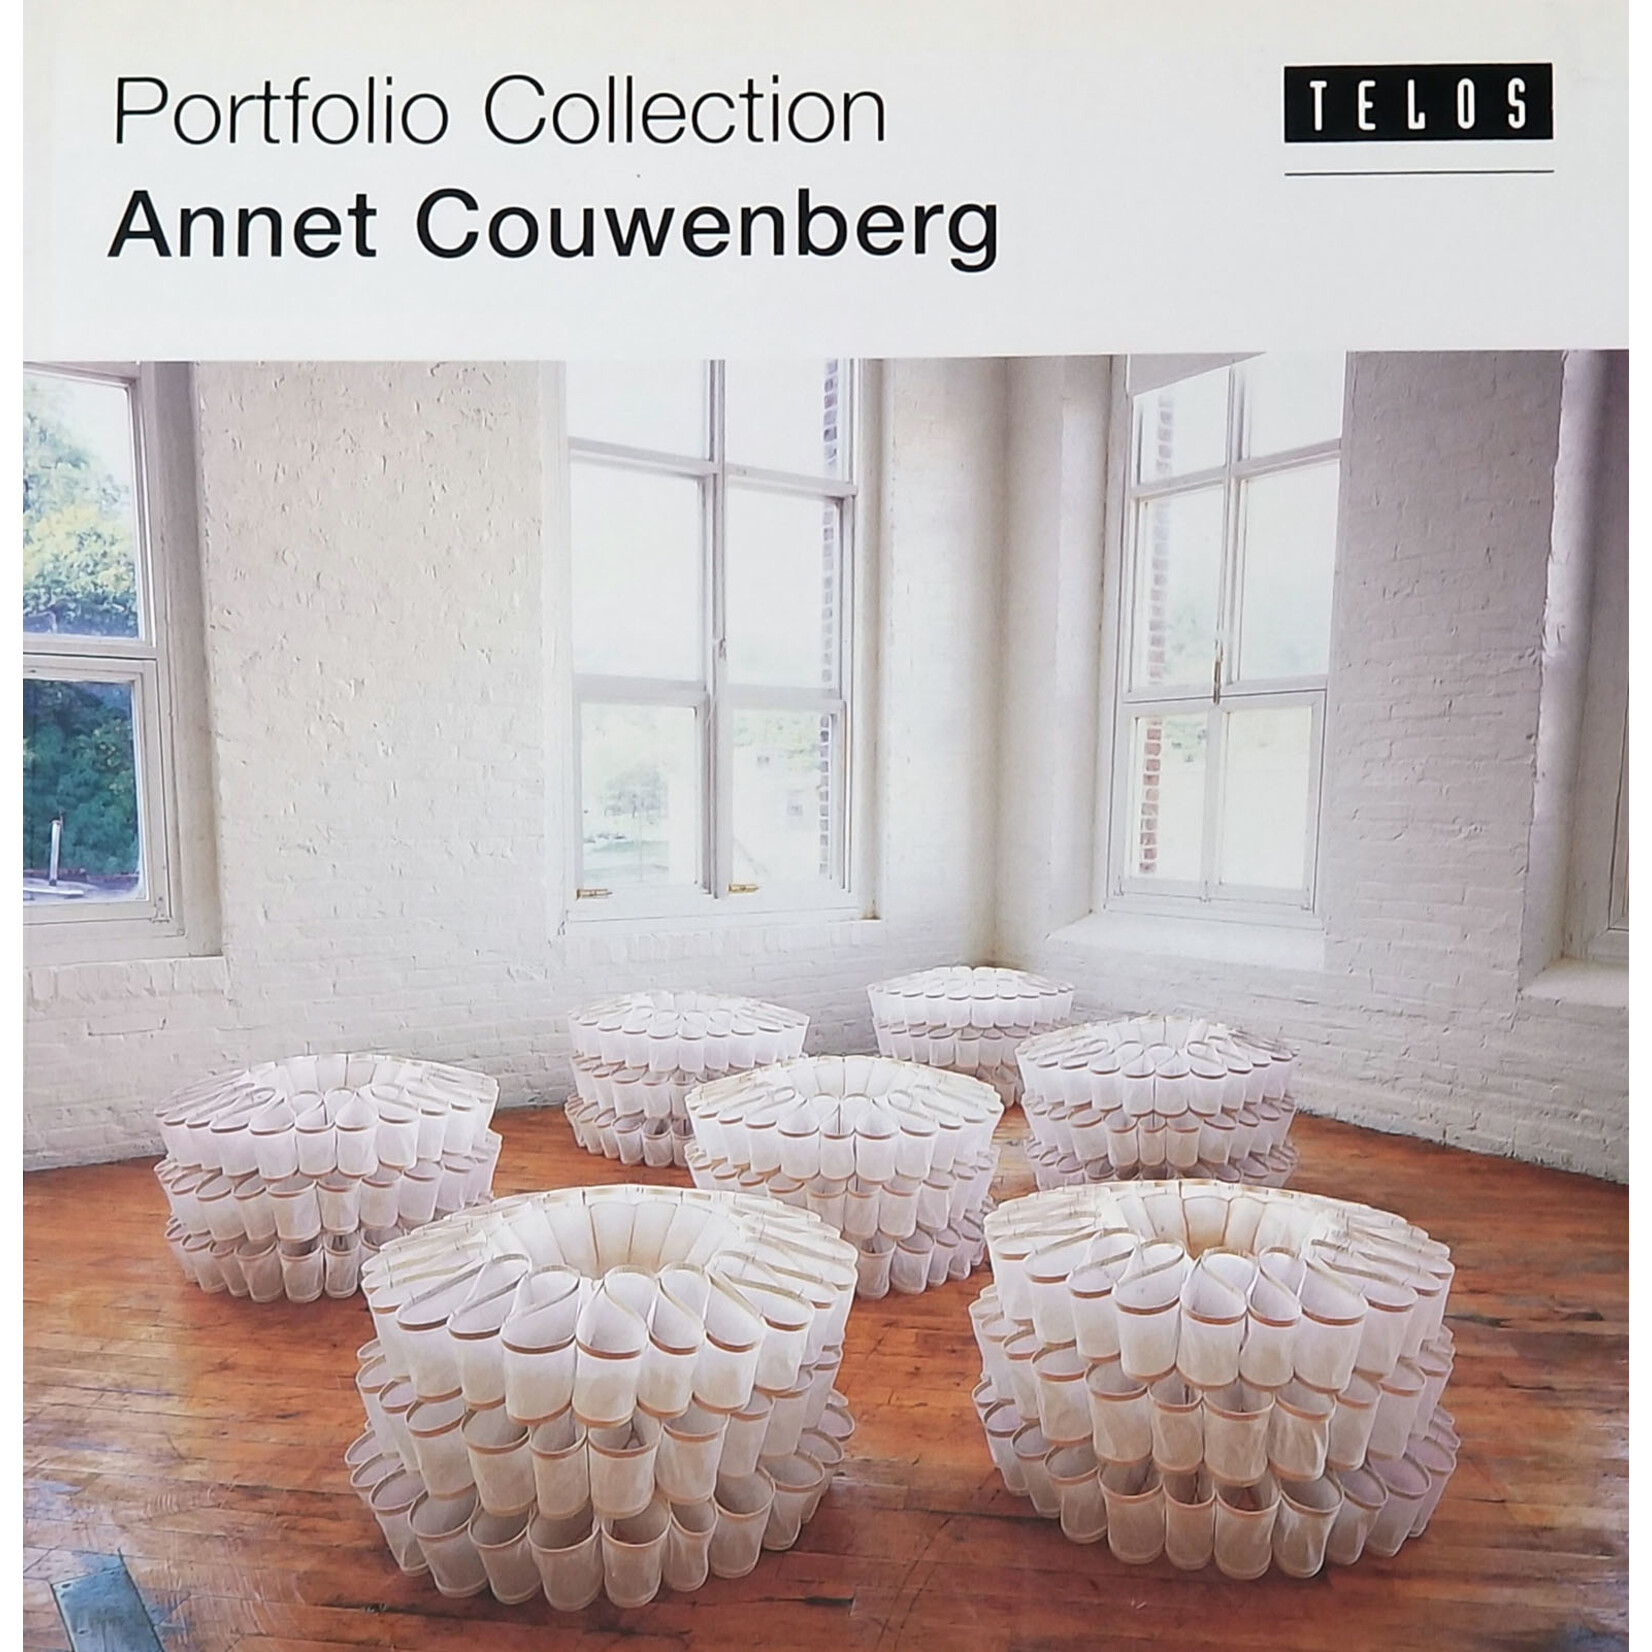 Portfolio Collection: Annet Couwenberg